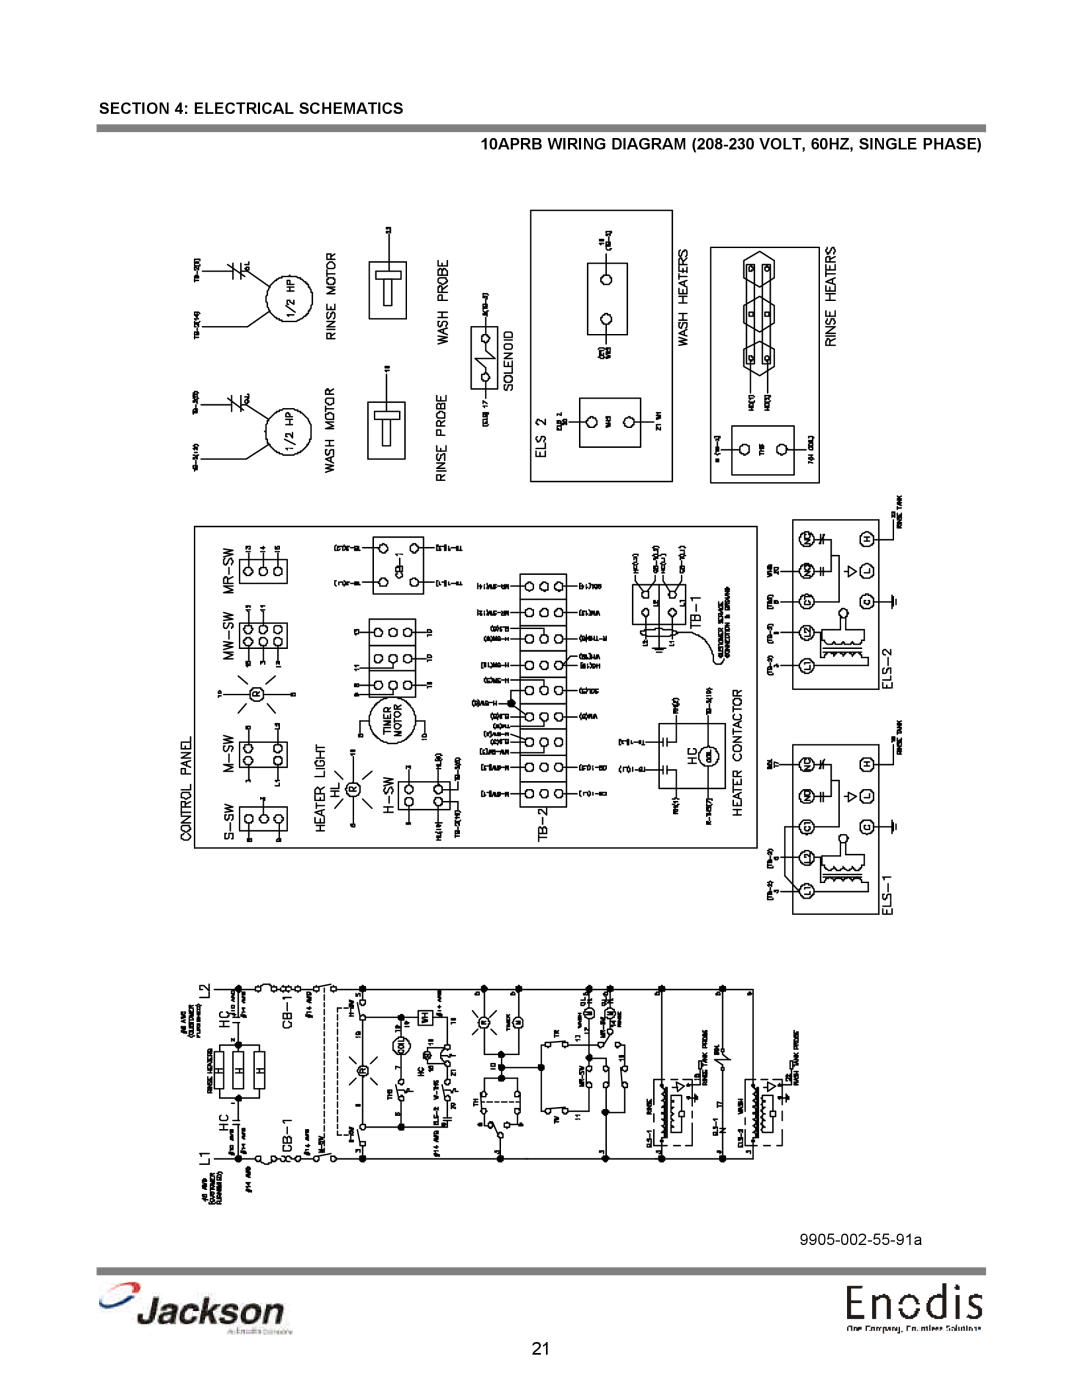 Jackson 10AB, 10U Electrical Schematics, 10APRB WIRING DIAGRAM 208-230 VOLT, 60HZ, SINGLE PHASE, 9905-002-55-91a 